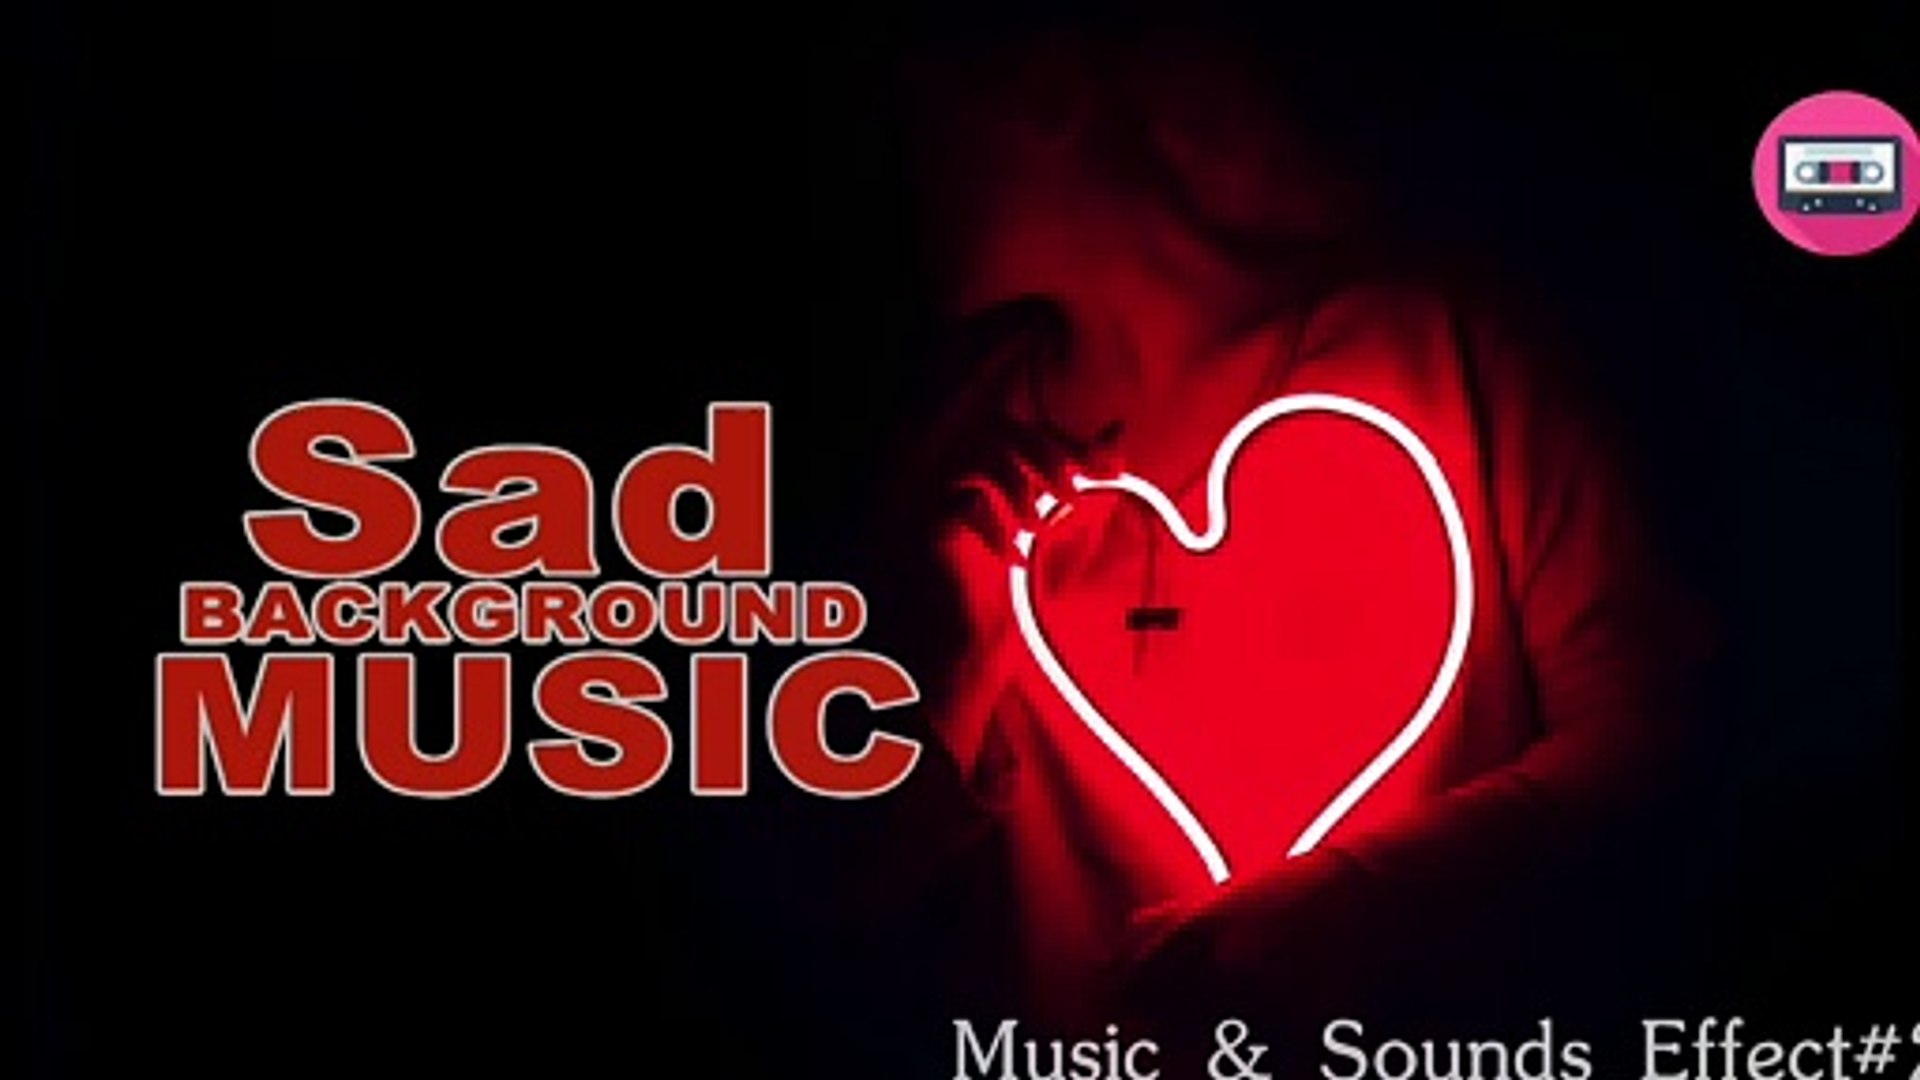 Sad BACKGROUND Music 7 Cinematic No Copyright Background Music For Youtube Videos | Copyright Free M